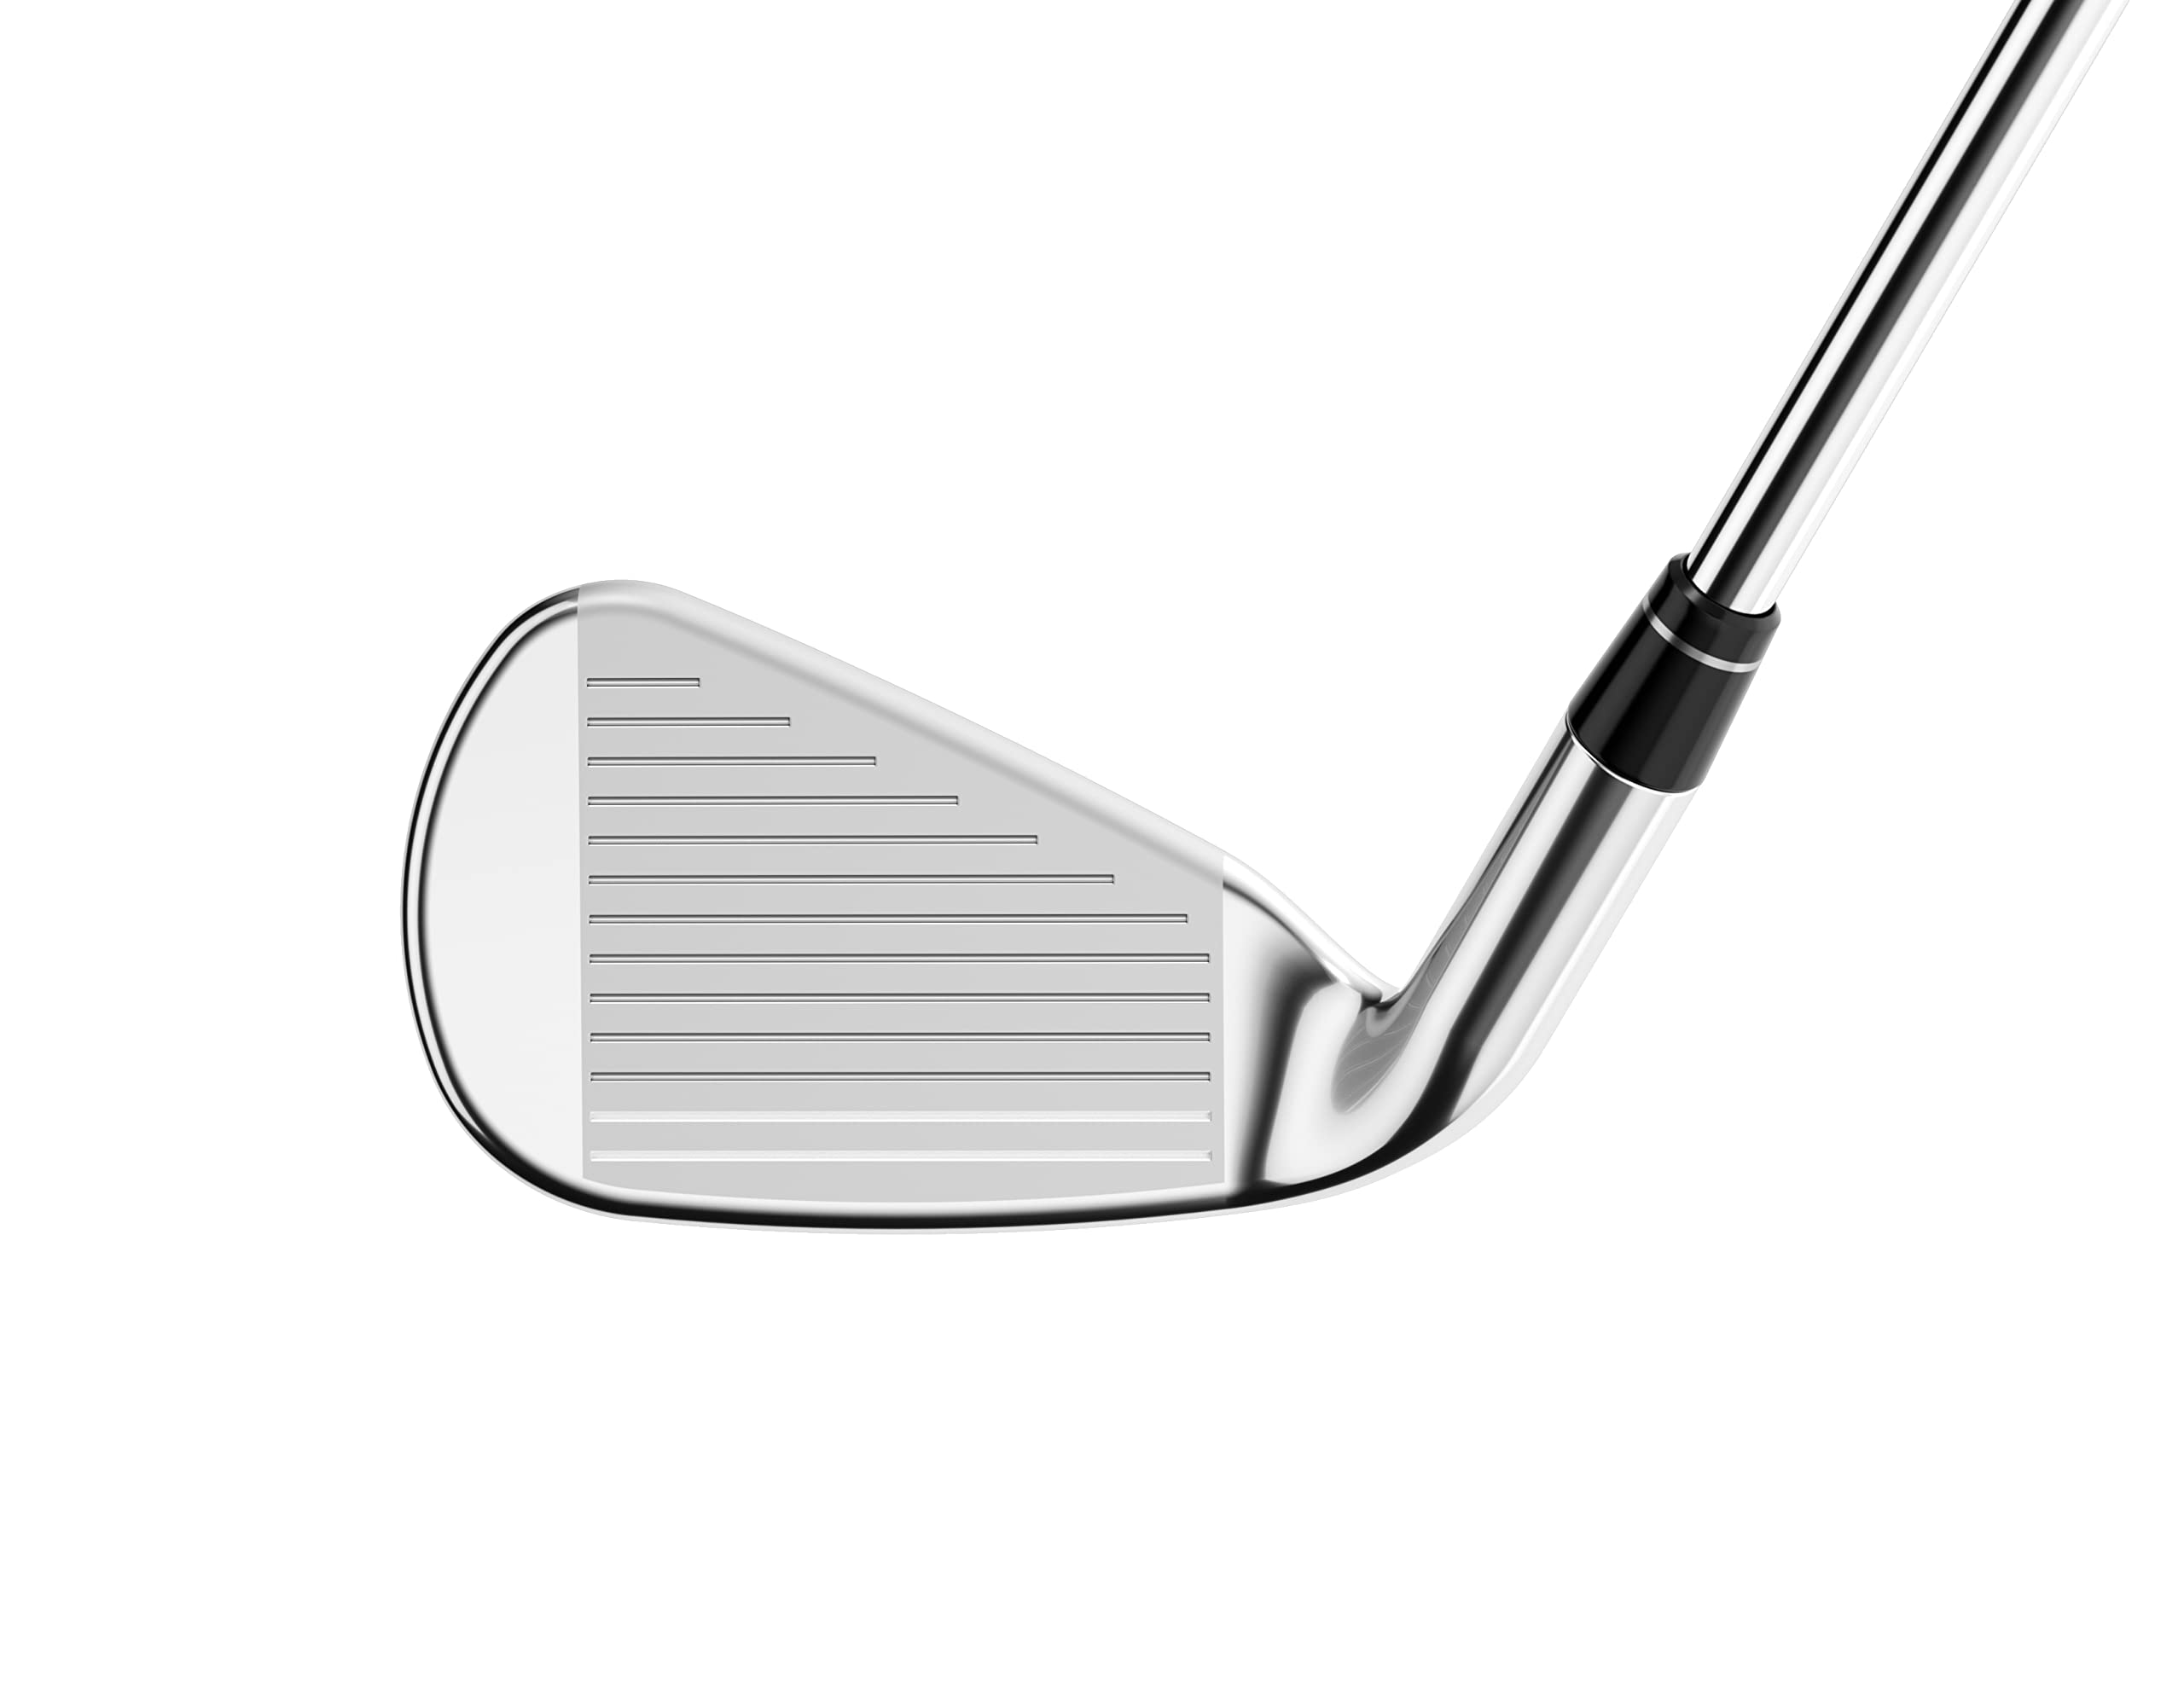 Callaway Golf Rogue ST Max OS Iron Set